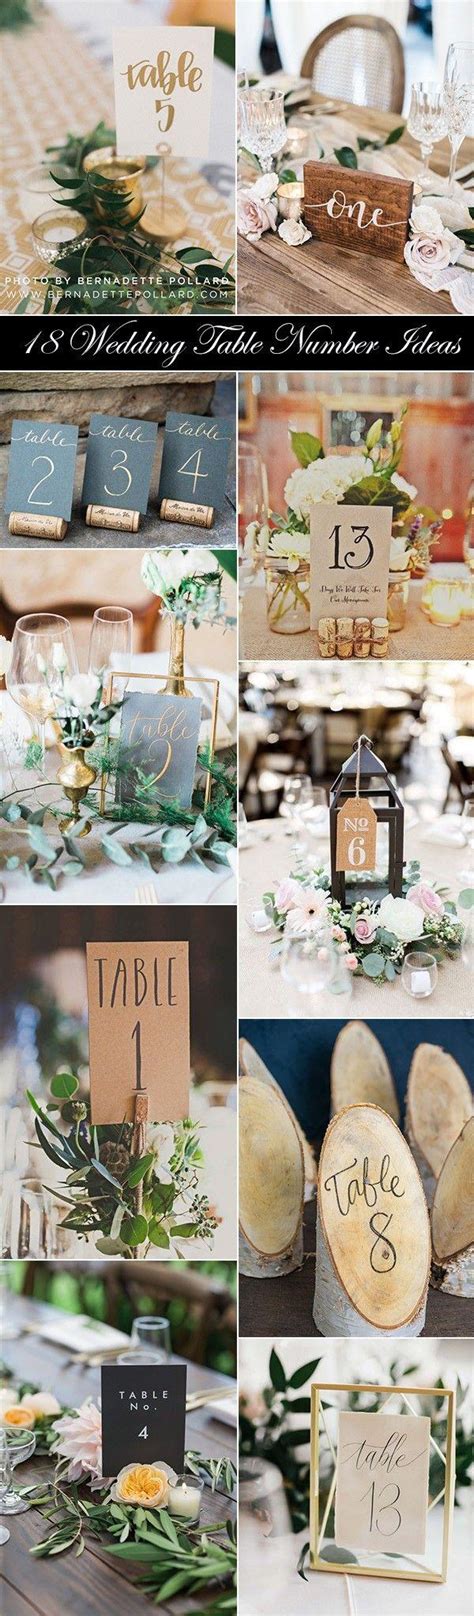 18 Inspiring Wedding Table Number Ideas To Love 2762386 Weddbook